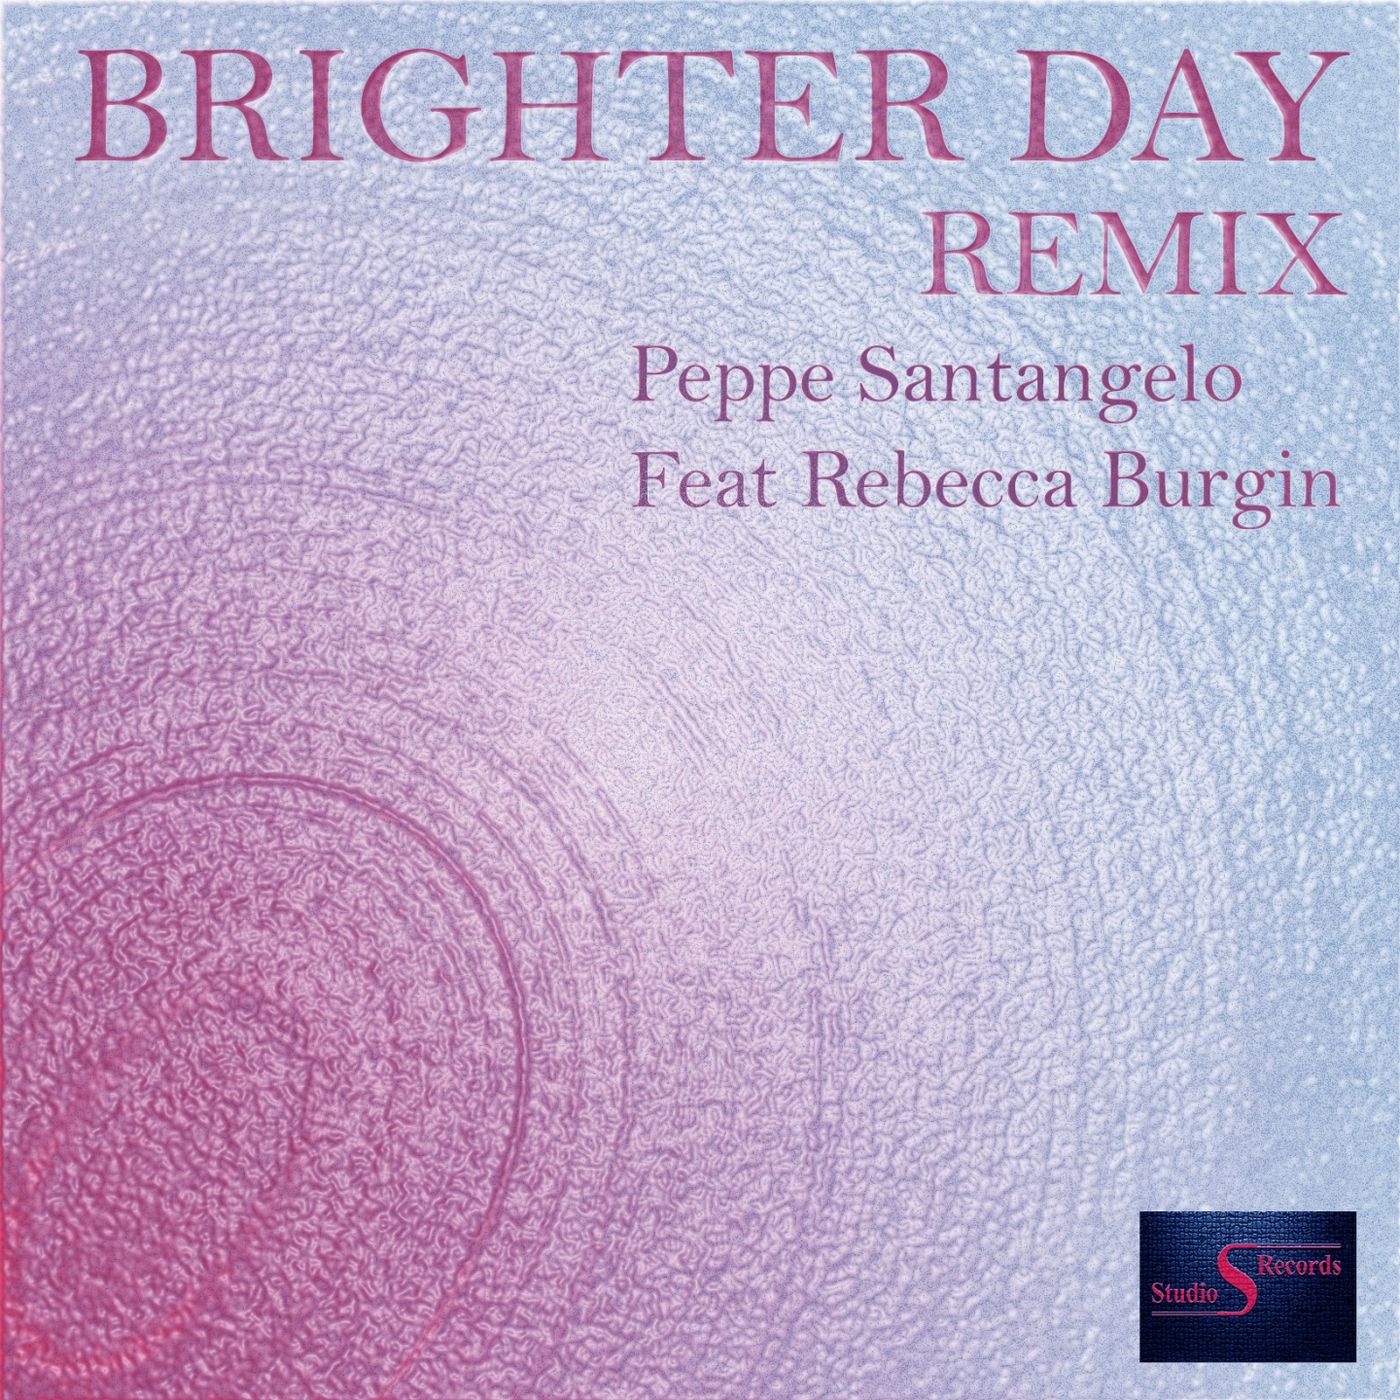 Peppe Santangelo ft Rebecca Burgin - Brighter Day / Studio s records